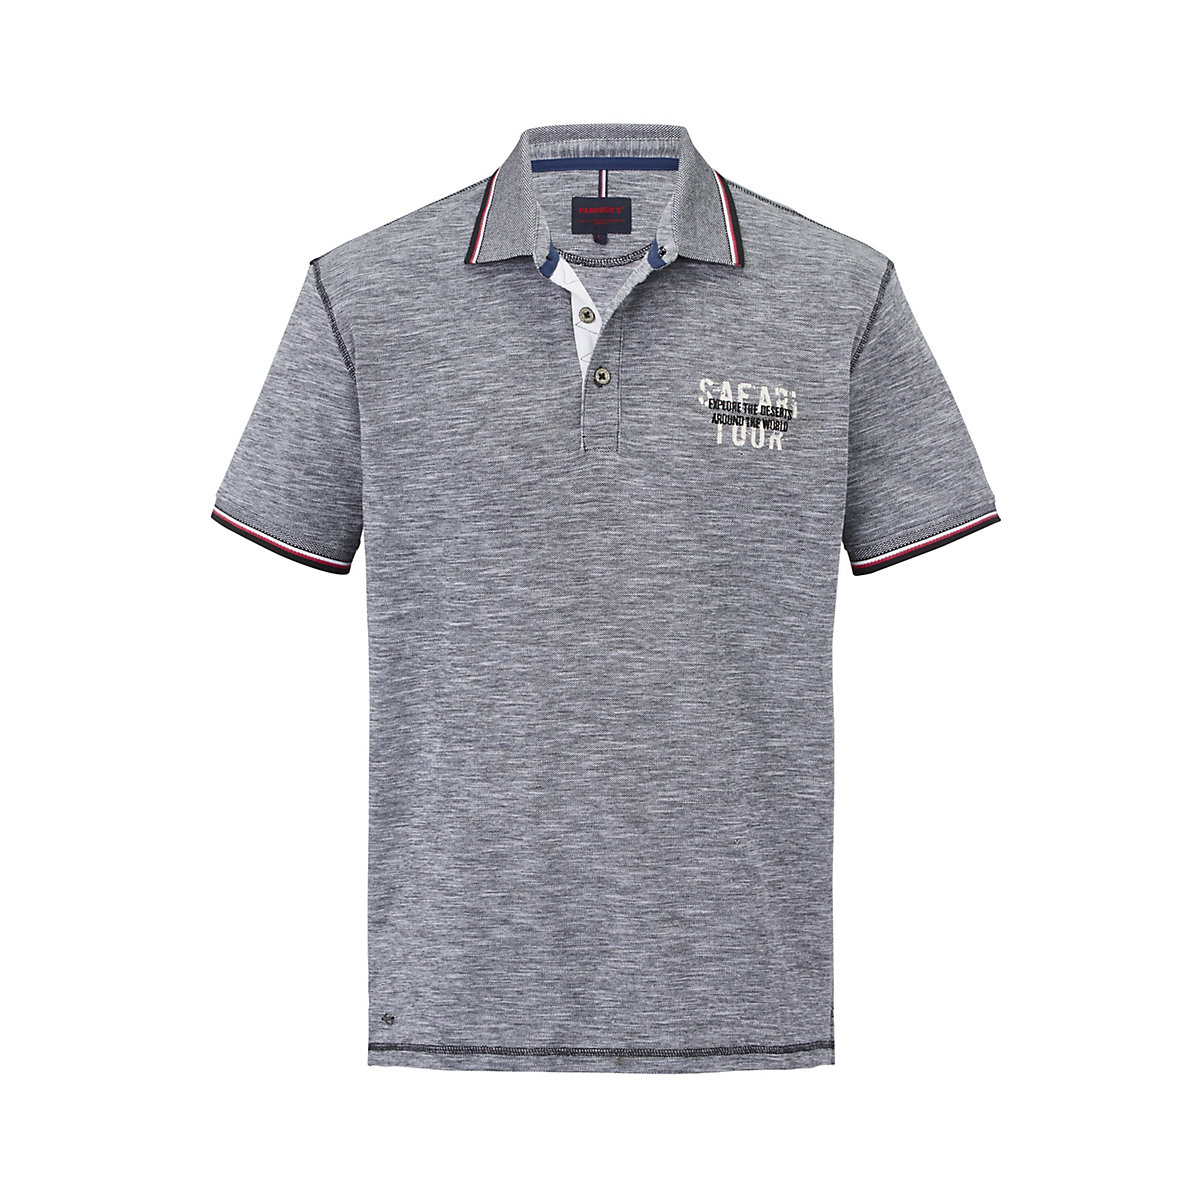 PADDOCK'S® PADDOCK'S Poloshirt mit dezemtem Print auf der Brust Polo Short sleeve grau